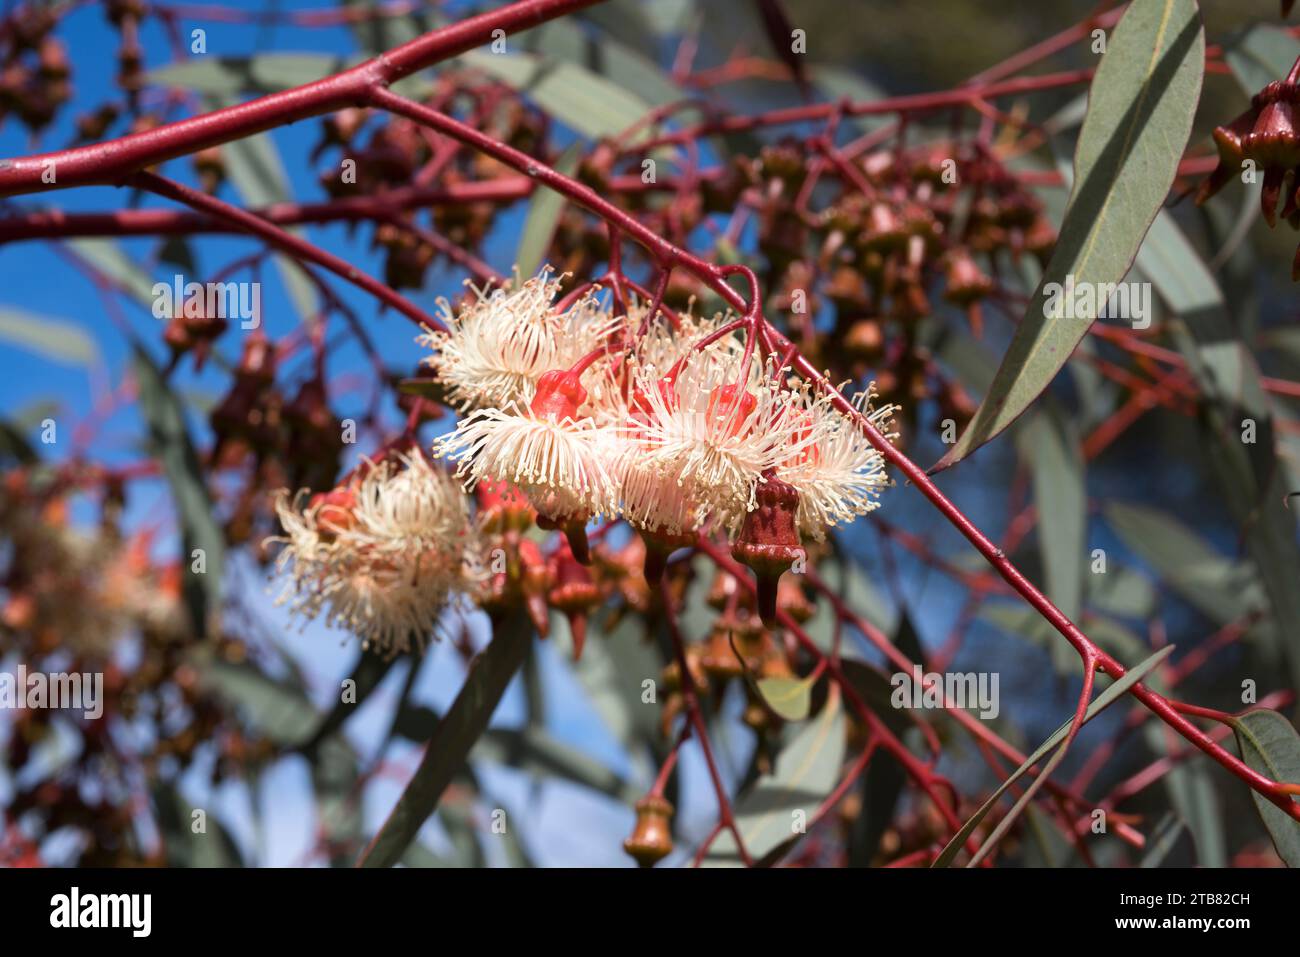 Coral gum or Coolgardie gum (Eucalyptus torquata) is a small tree endemic to western Australia. Flowers detail. Stock Photo